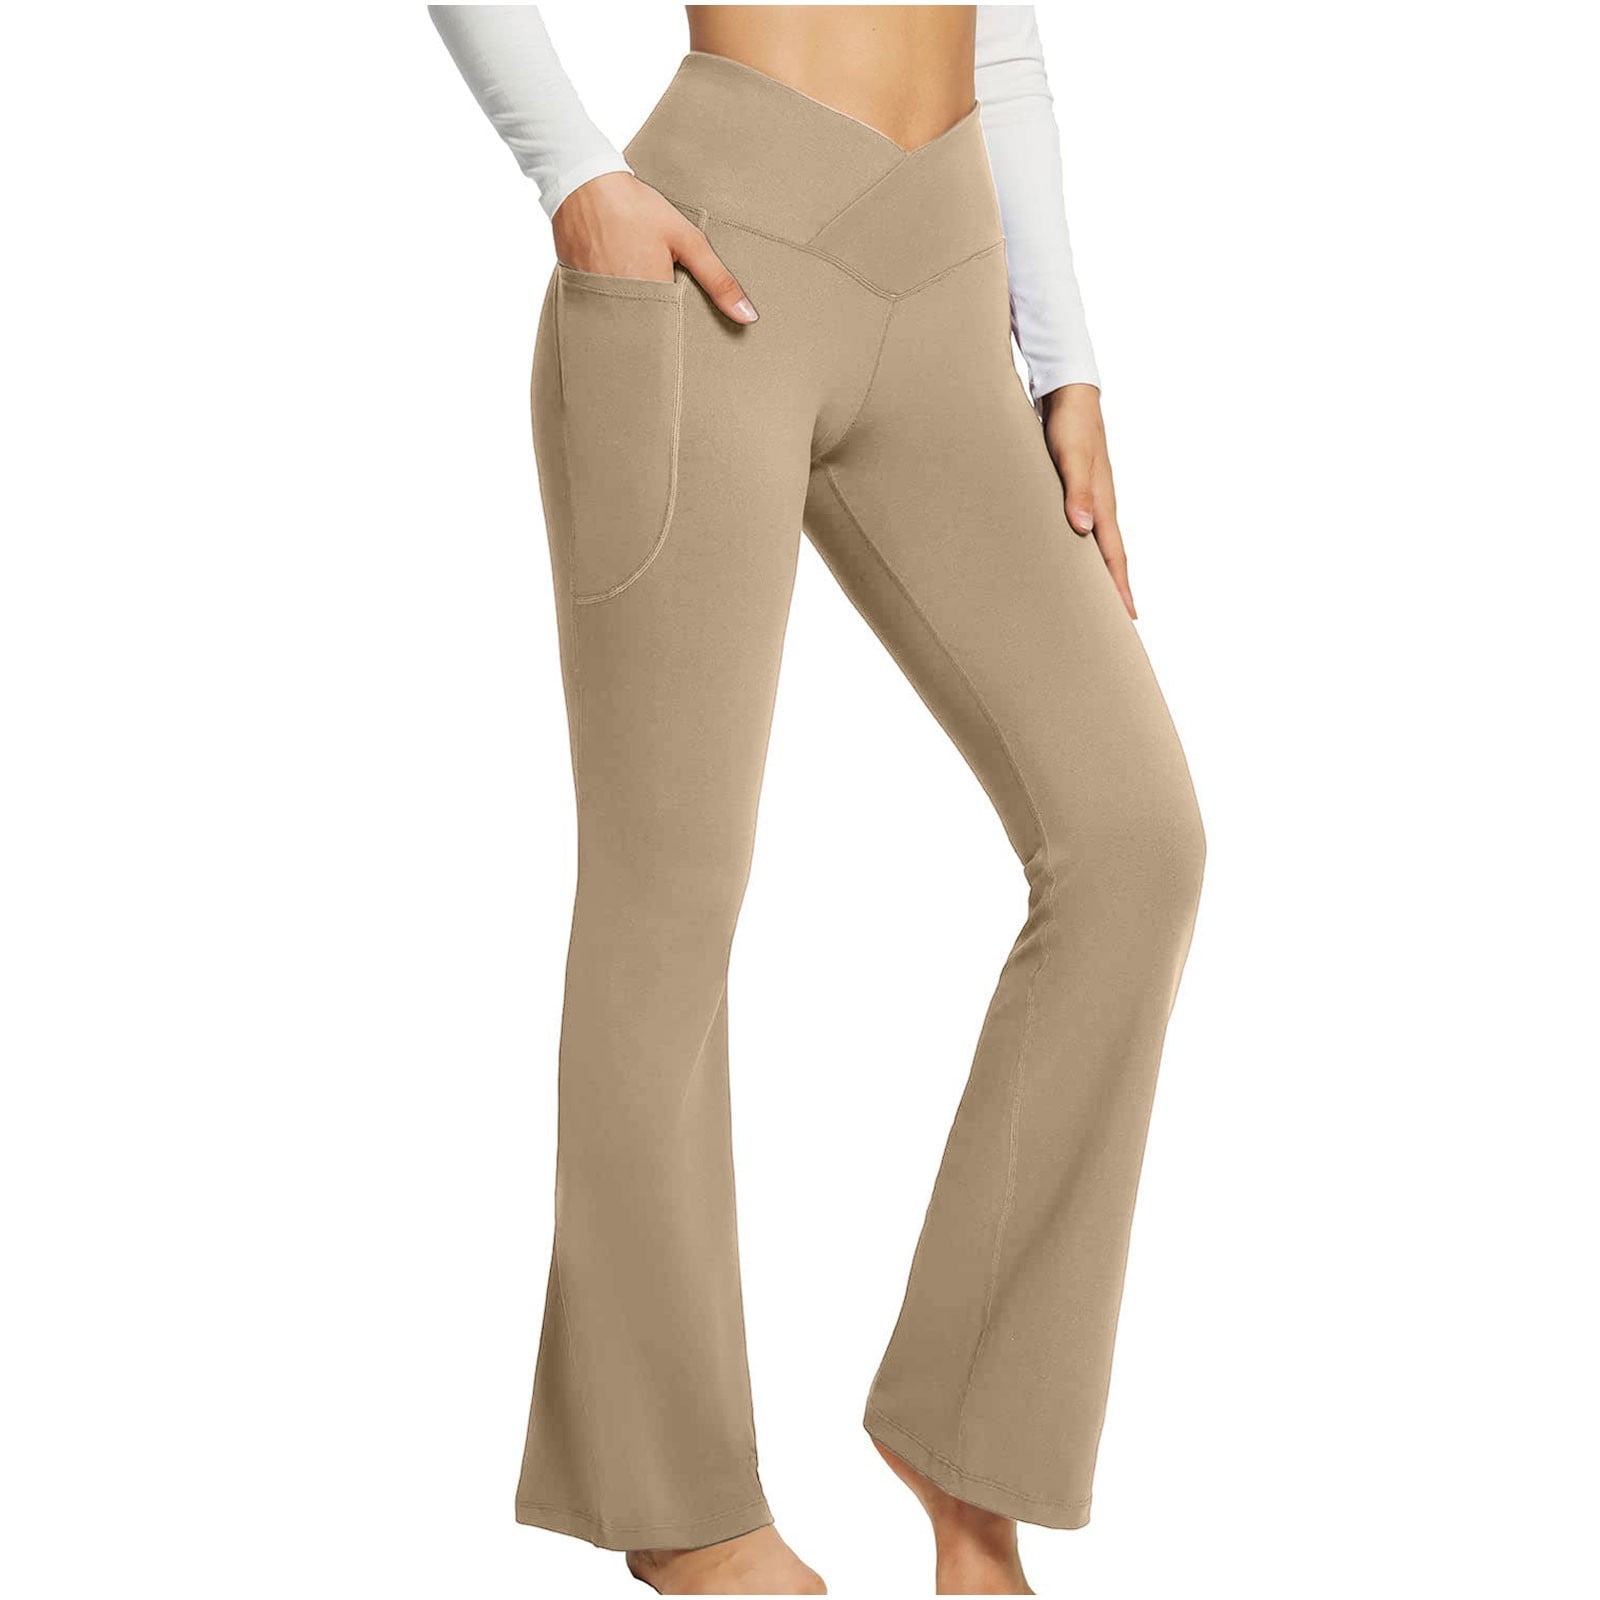 Women's Yoga Clothes, Flare Pants, Tops & Leggings